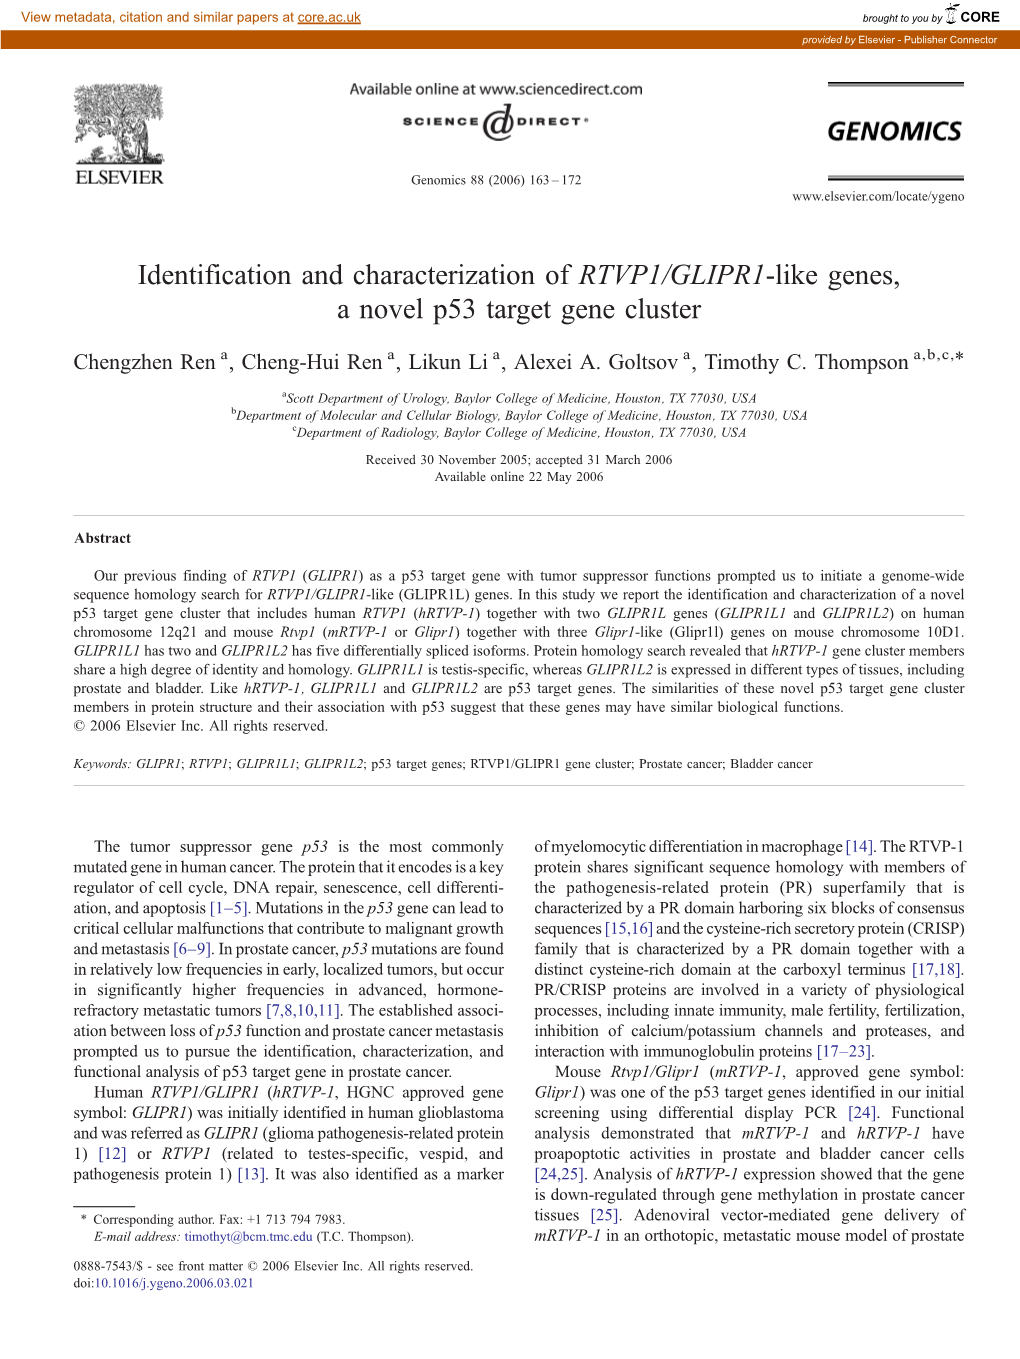 Identification and Characterization of RTVP1/GLIPR1-Like Genes, a Novel P53 Target Gene Cluster ⁎ Chengzhen Ren A, Cheng-Hui Ren A, Likun Li A, Alexei A